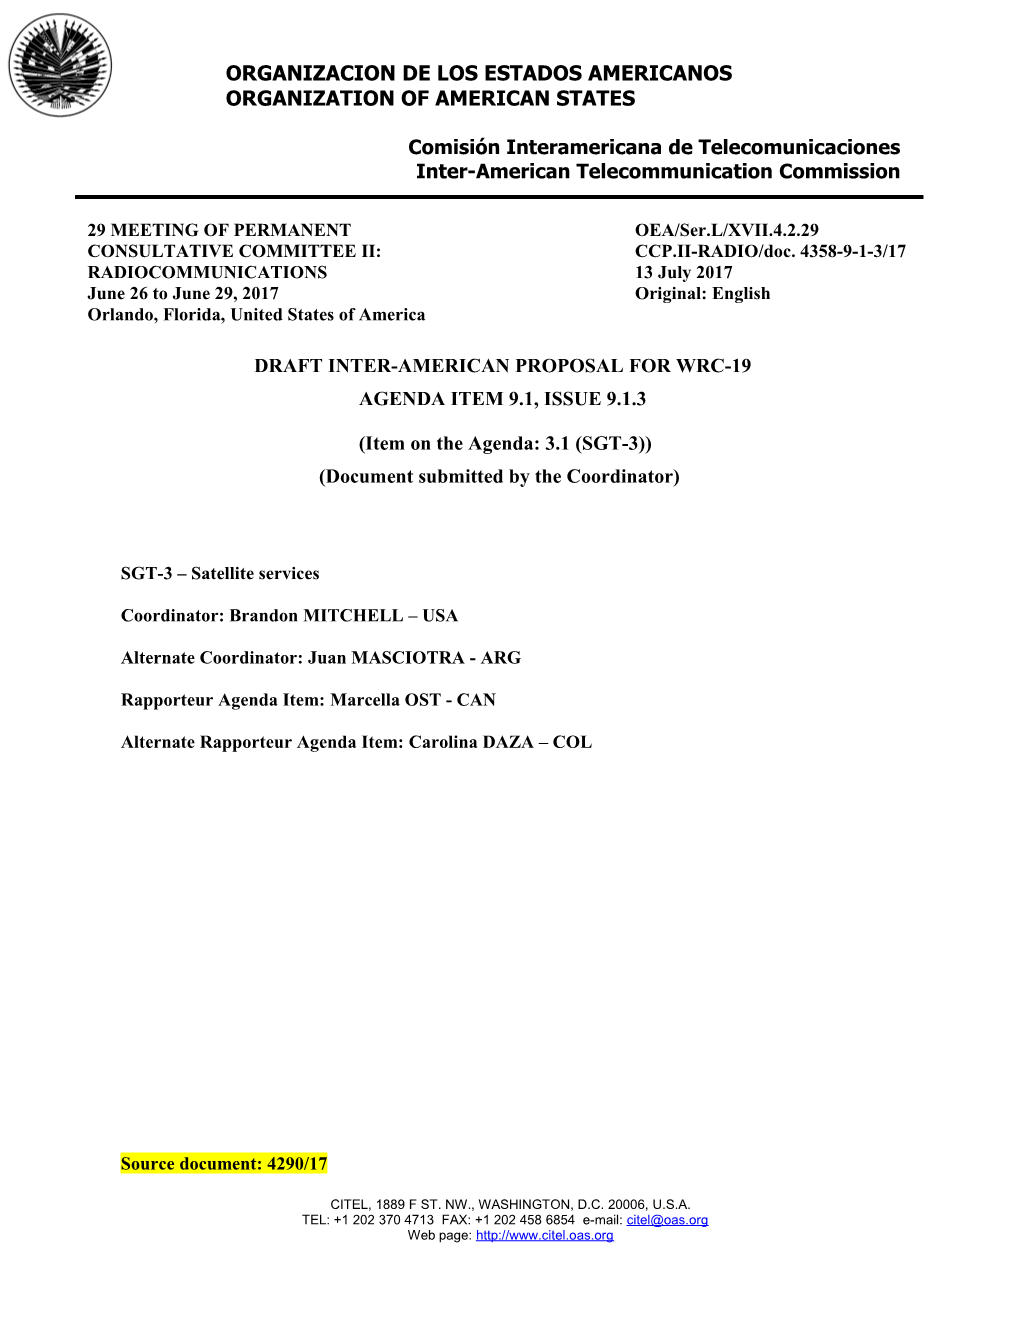 Diap - Agenda Item 9.1, Issue 9.1.3 Draft Inter-American Proposal for Wrc-19